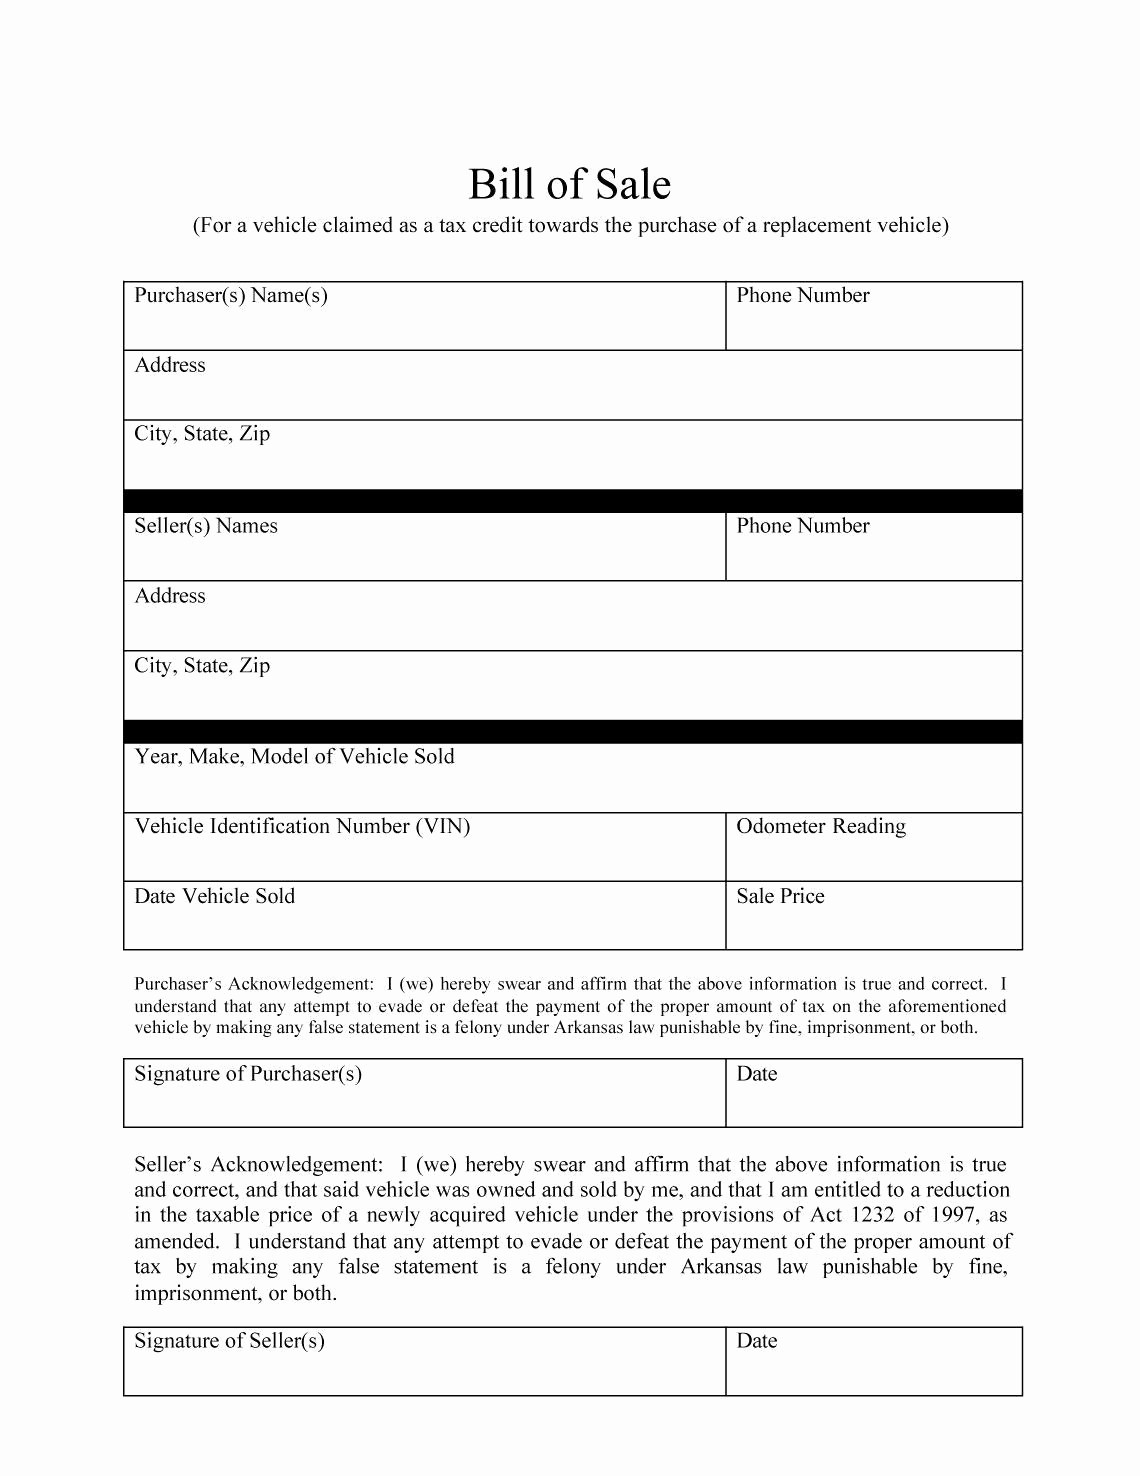 Print Bill Of Sale Car New 46 Fee Printable Bill Of Sale Templates Car Boat Gun